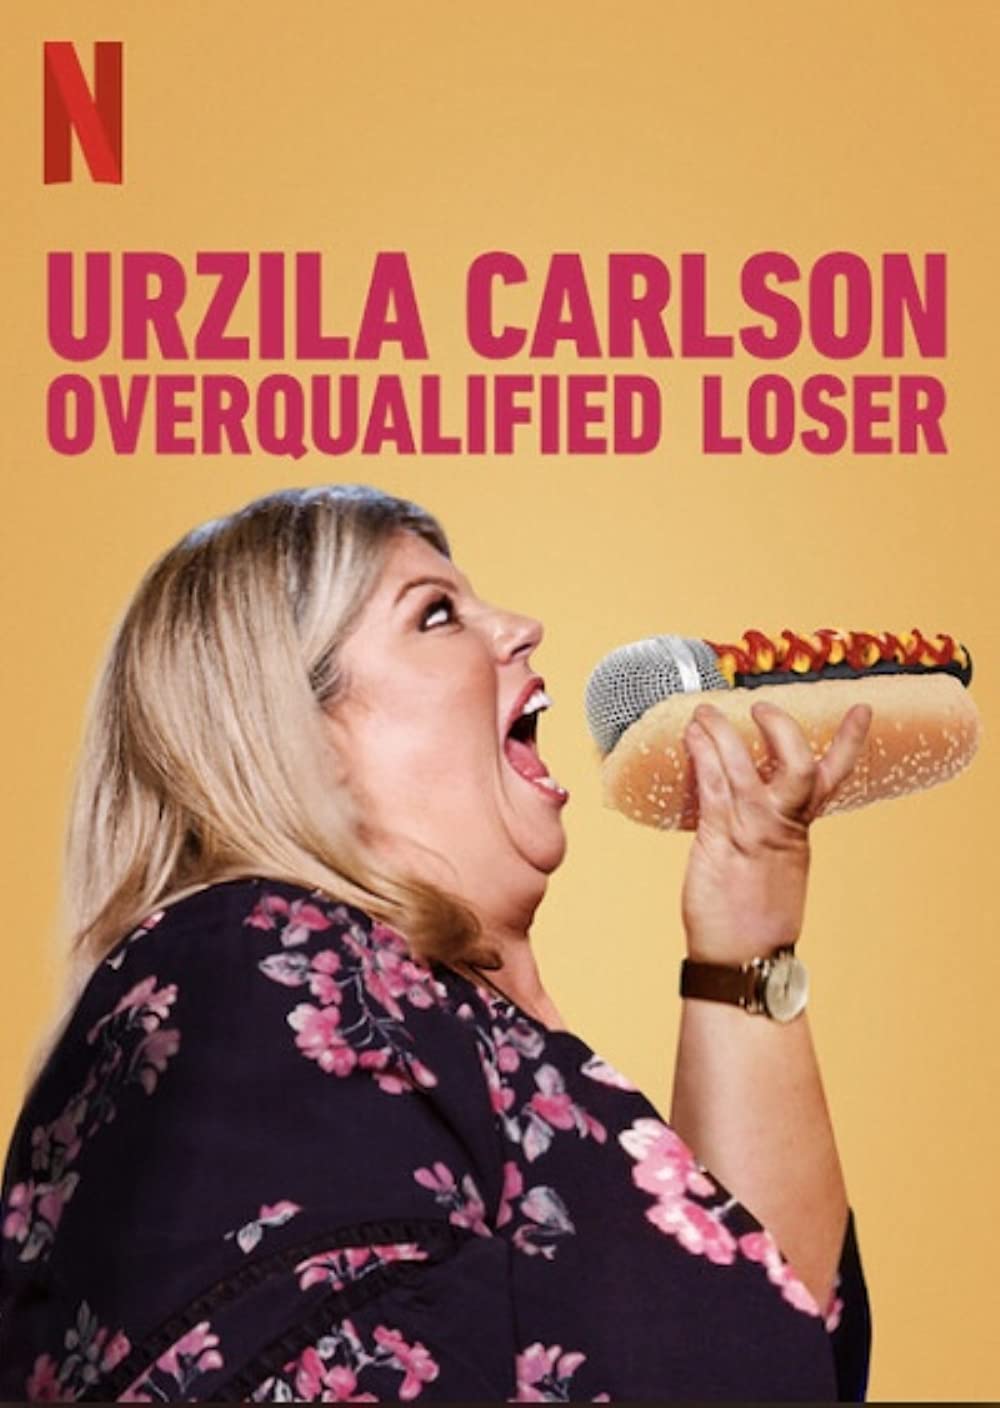 Filmbeschreibung zu Urzila Carlson: Overqualified Loser